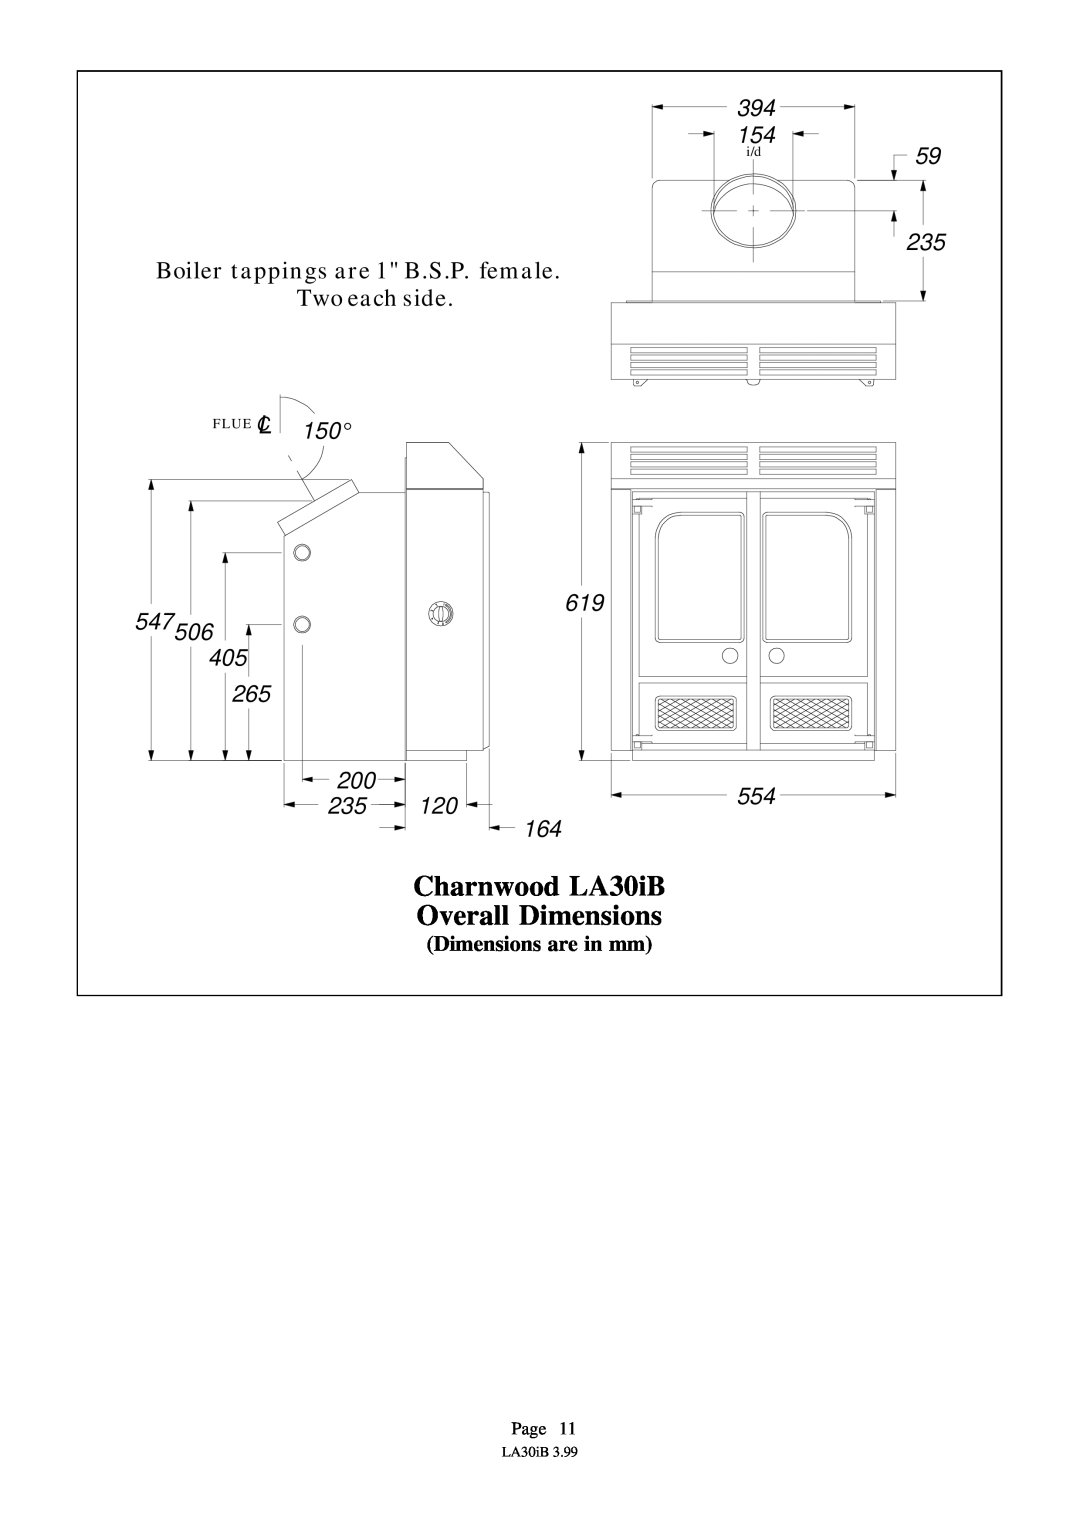 Charnwood installation instructions Charnwood LA30iB Overall Dimensions, 394, 547506, 619 